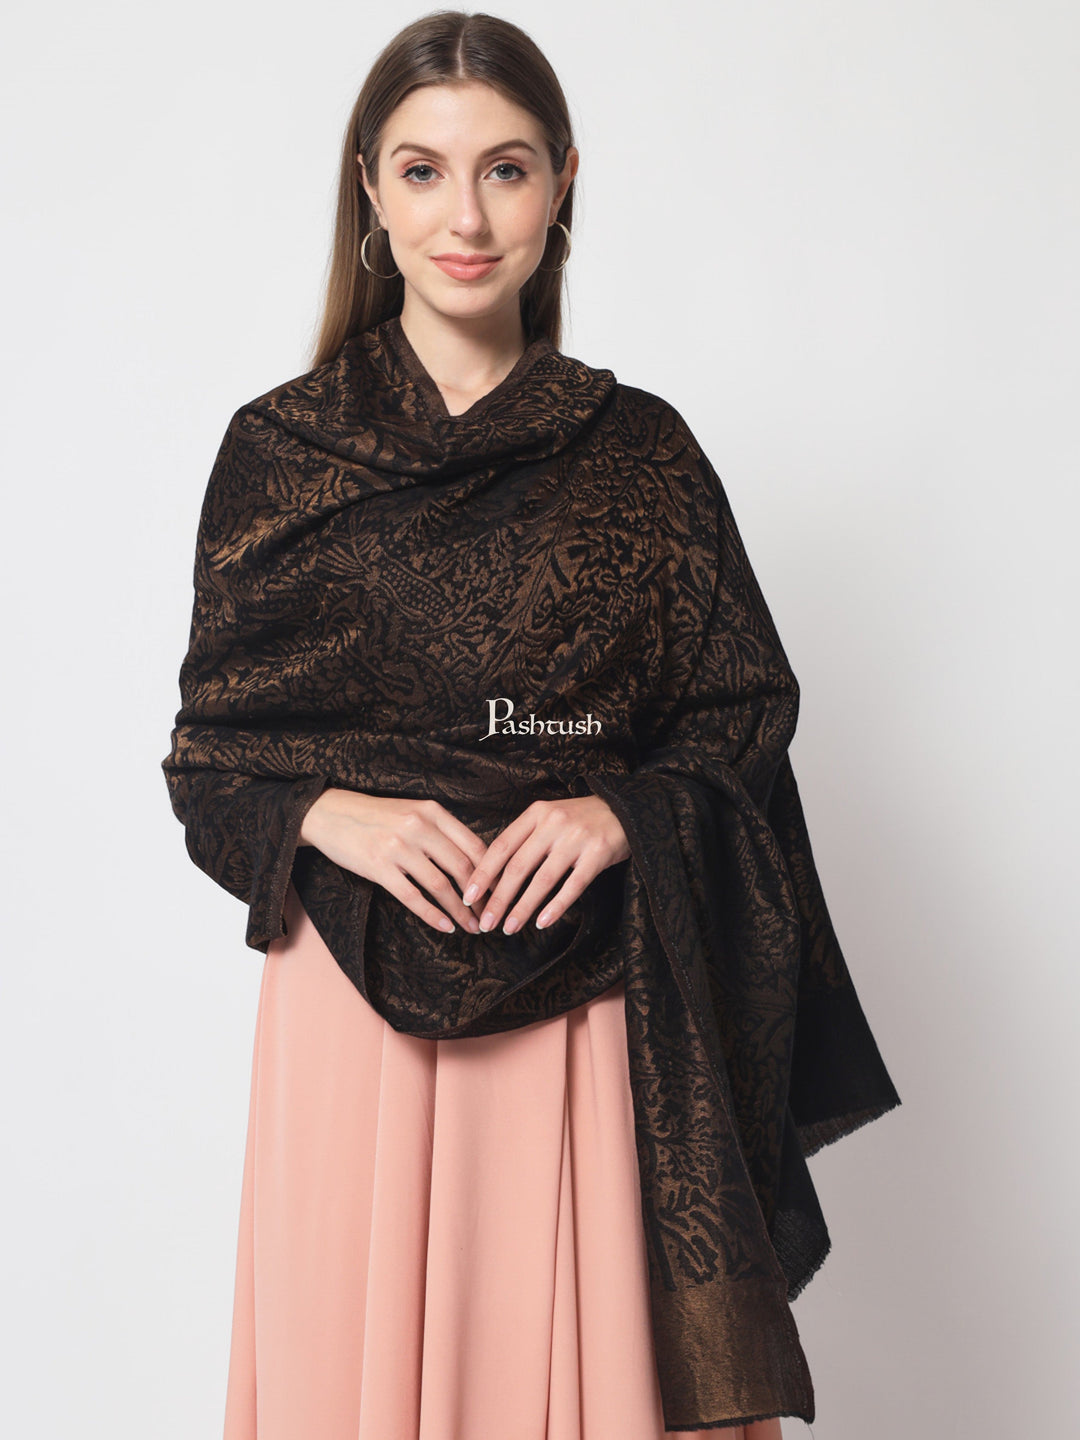 Pashtush India Womens Shawls Pashtush Womens Twilight Collection, Jacquard shawl, With Metallic Thread Weave, Fine Wool, Black